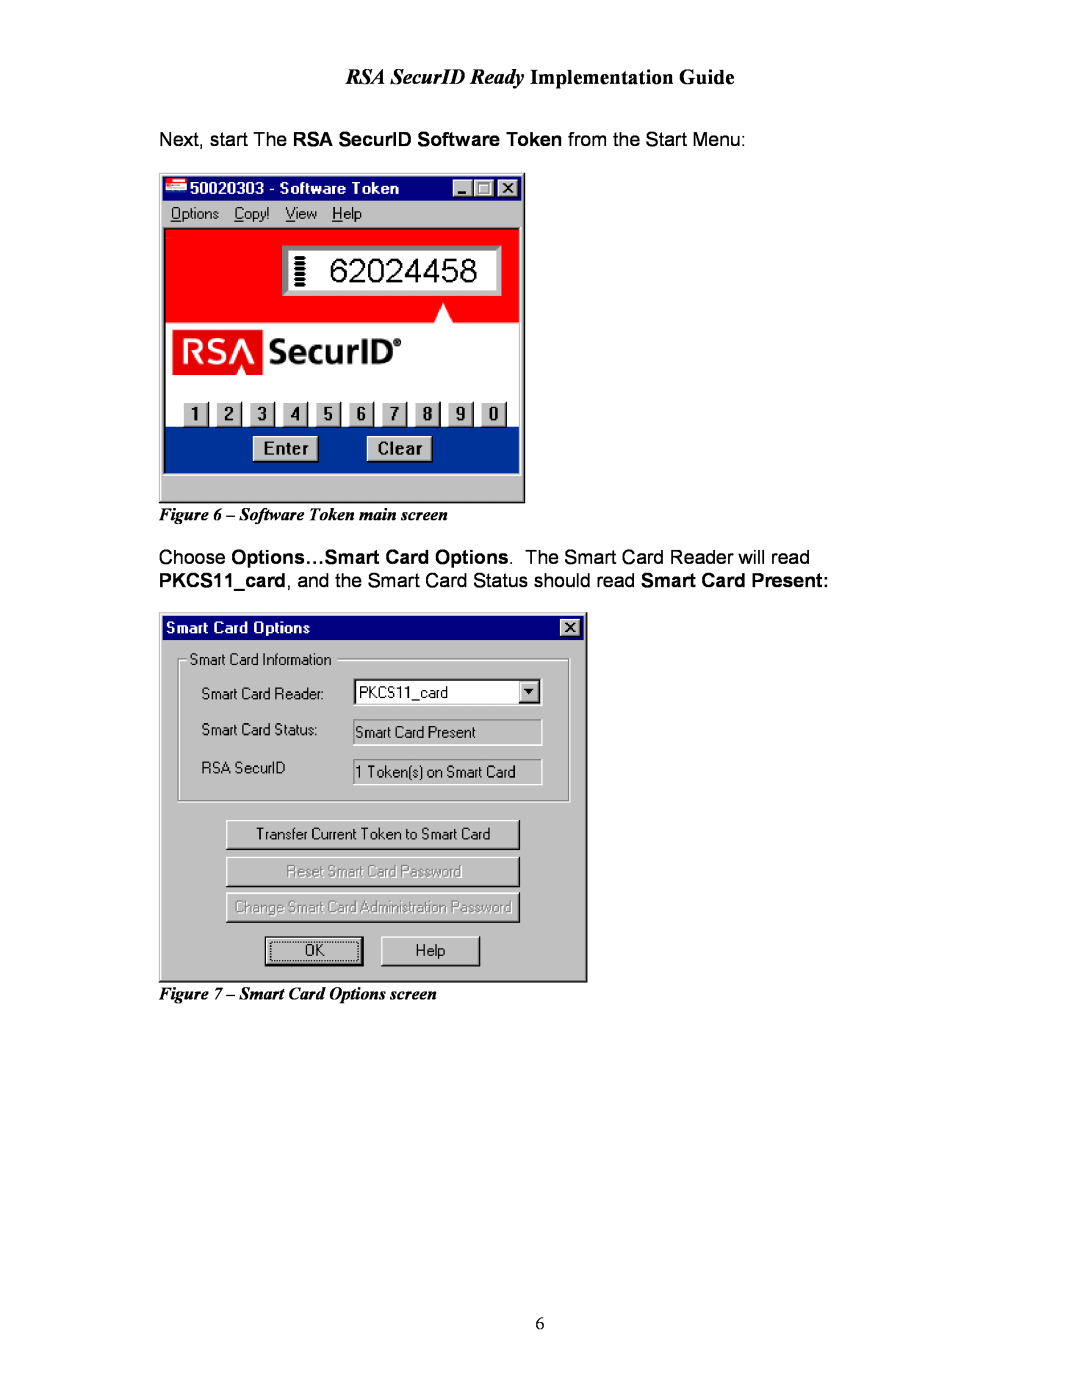 Rainbow Technologies 2000 RSA SecurID Ready Implementation Guide, Software Token main screen, Smart Card Options screen 